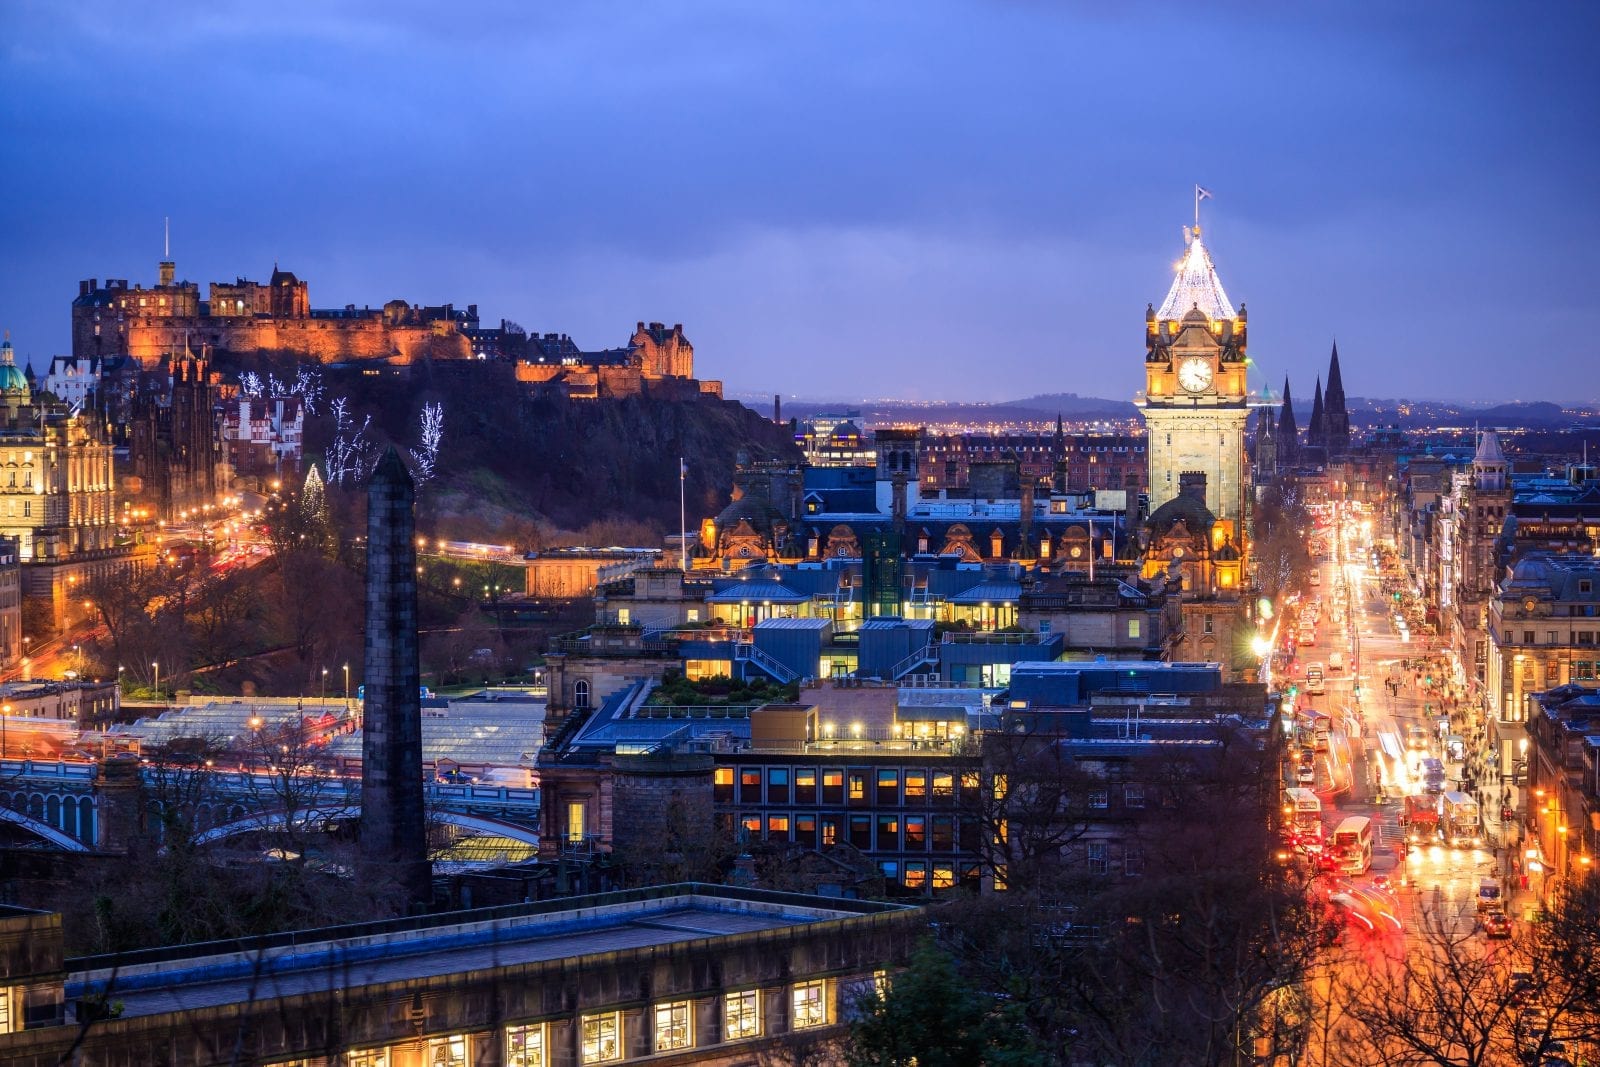 shows skyline of Edinburgh at night